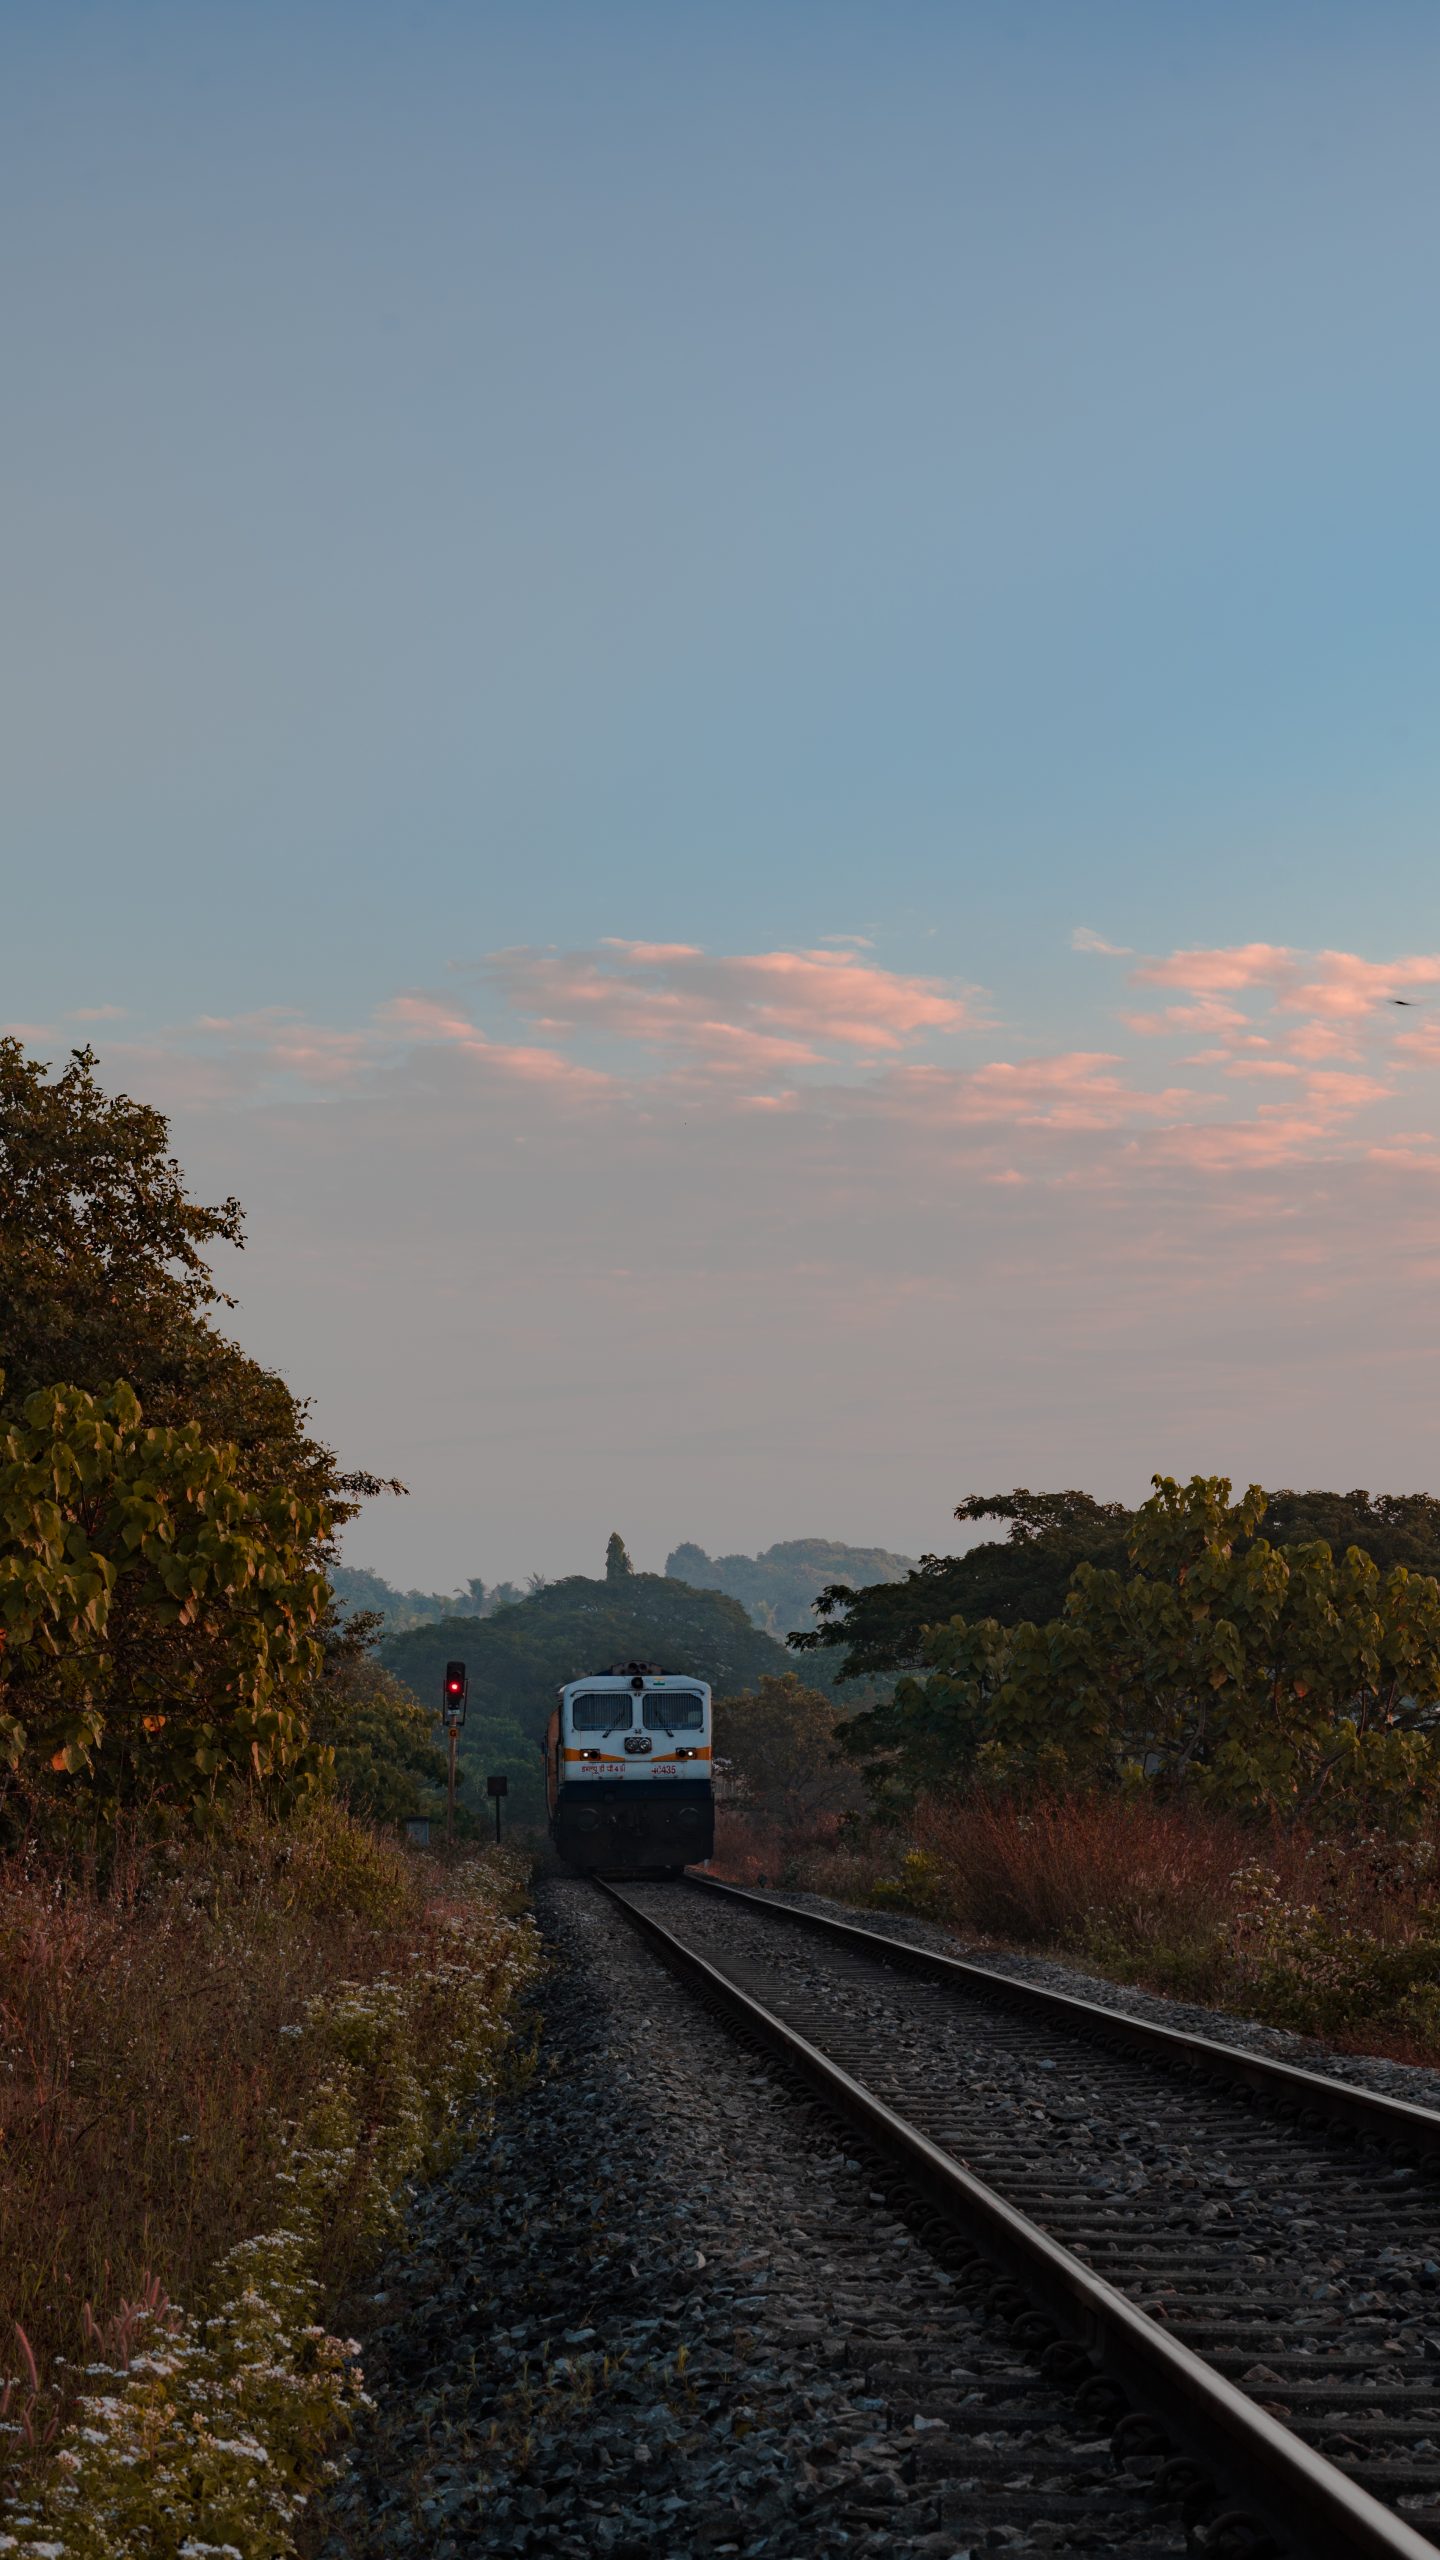 A train on a railway track